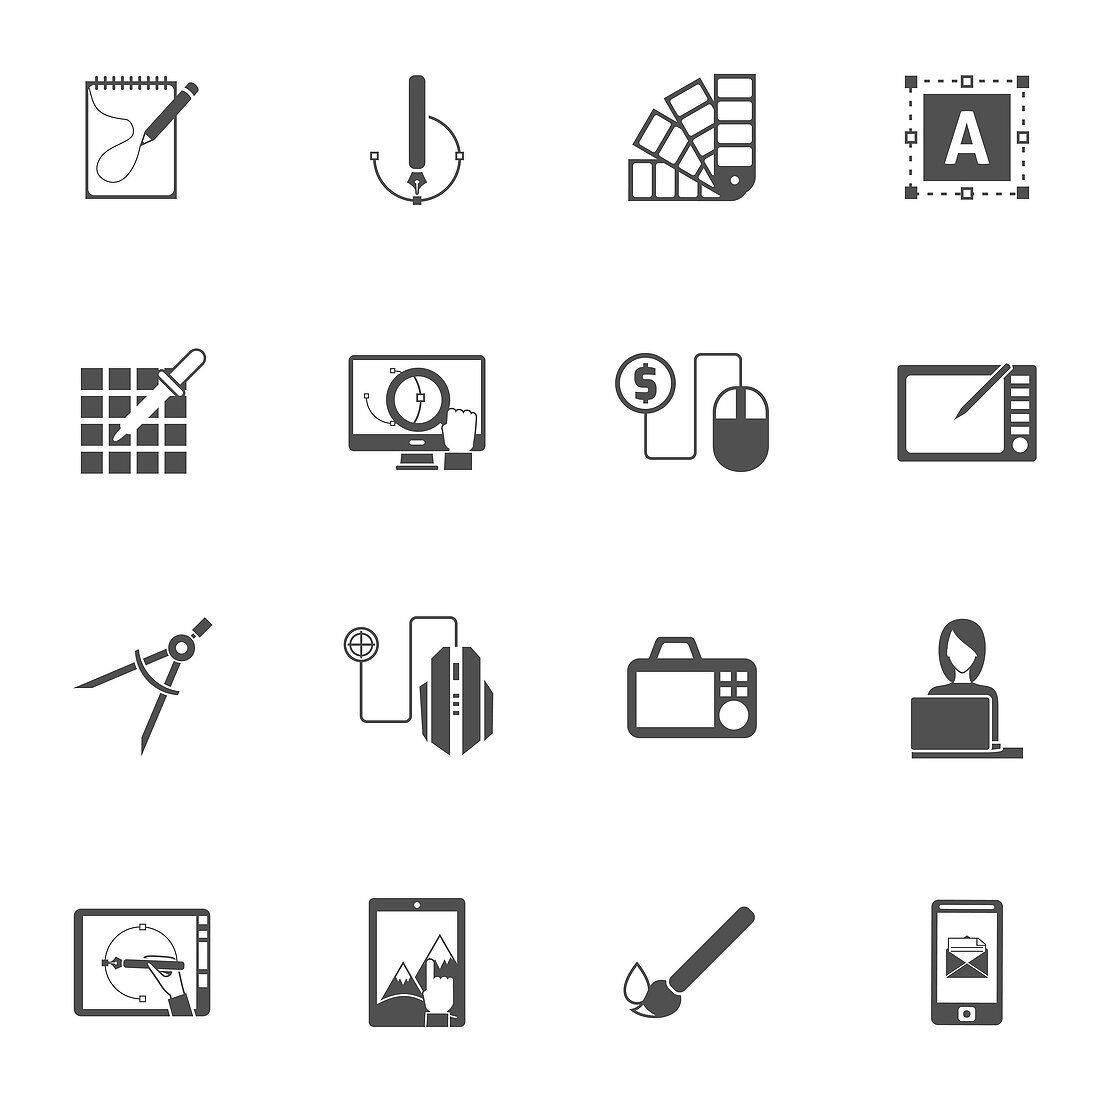 Graphic design icons, illustration